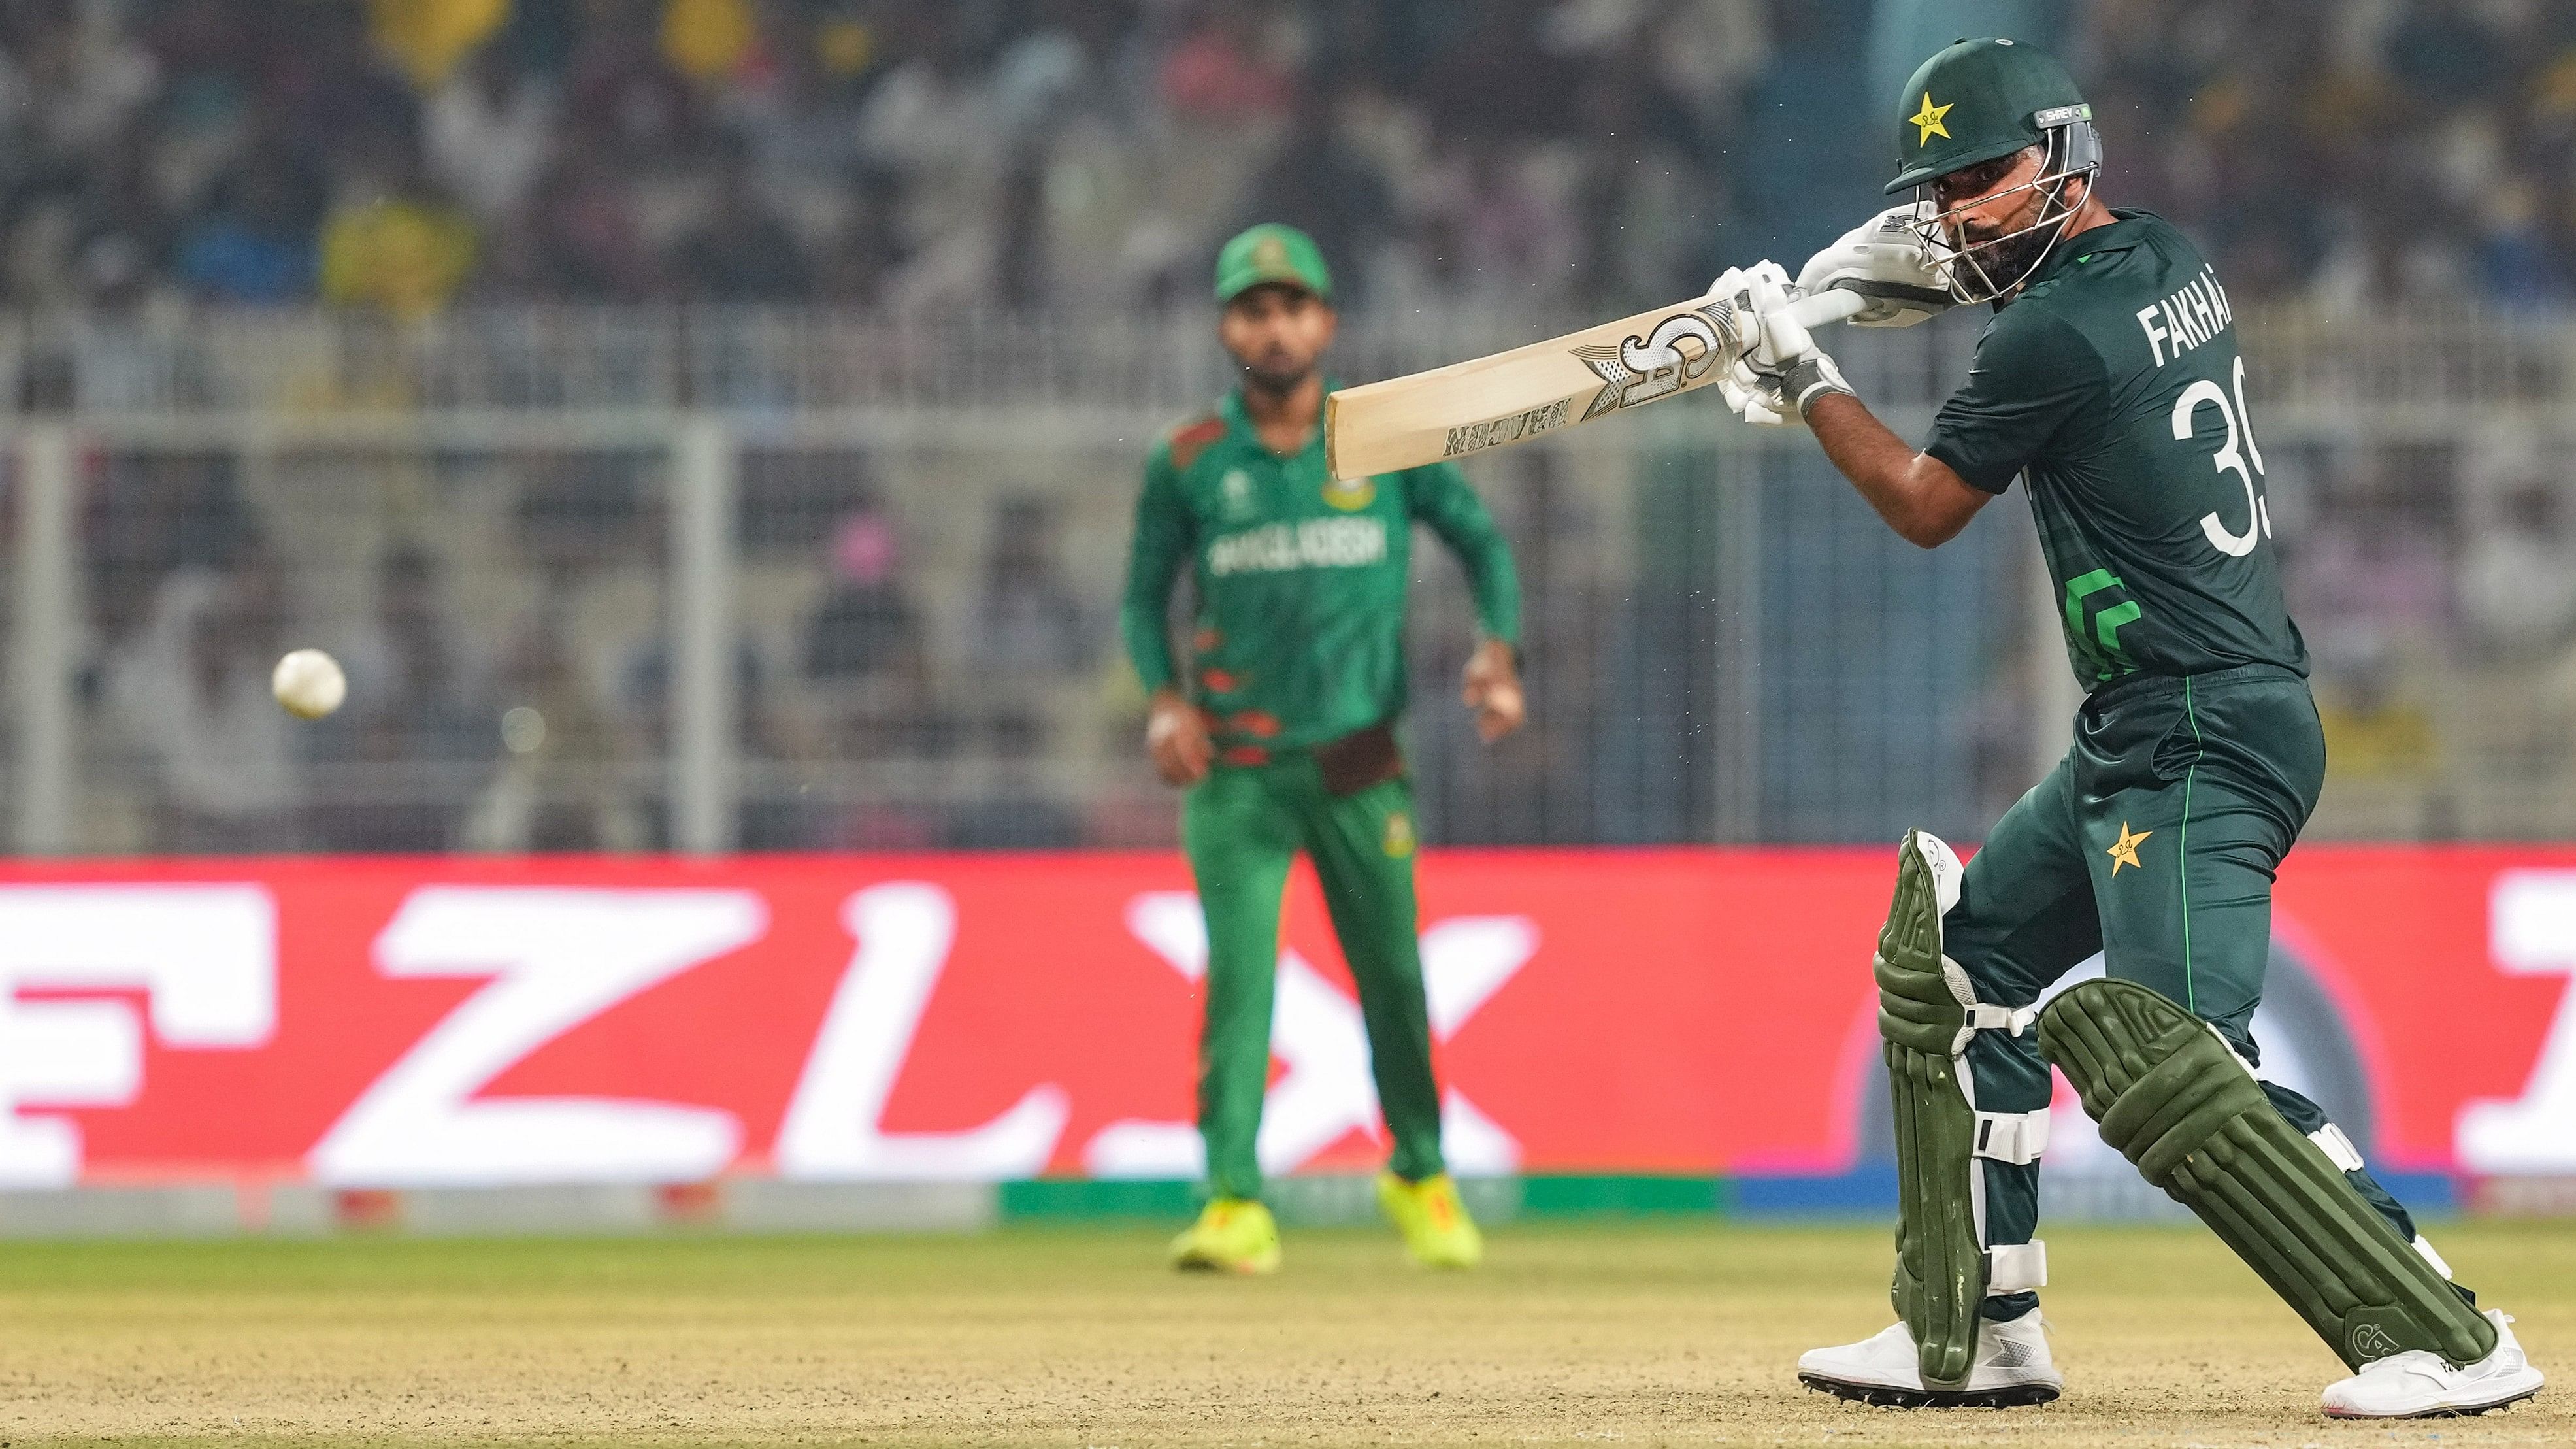 <div class="paragraphs"><p>Pakistan's batter Fakhar Zaman plays a shot during the ICC Men's Cricket World Cup 2023 match between Bangladesh and Pakistan, at Eden Gardens in Kolkata, Tuesday, Oct. 31, 2023.</p></div>